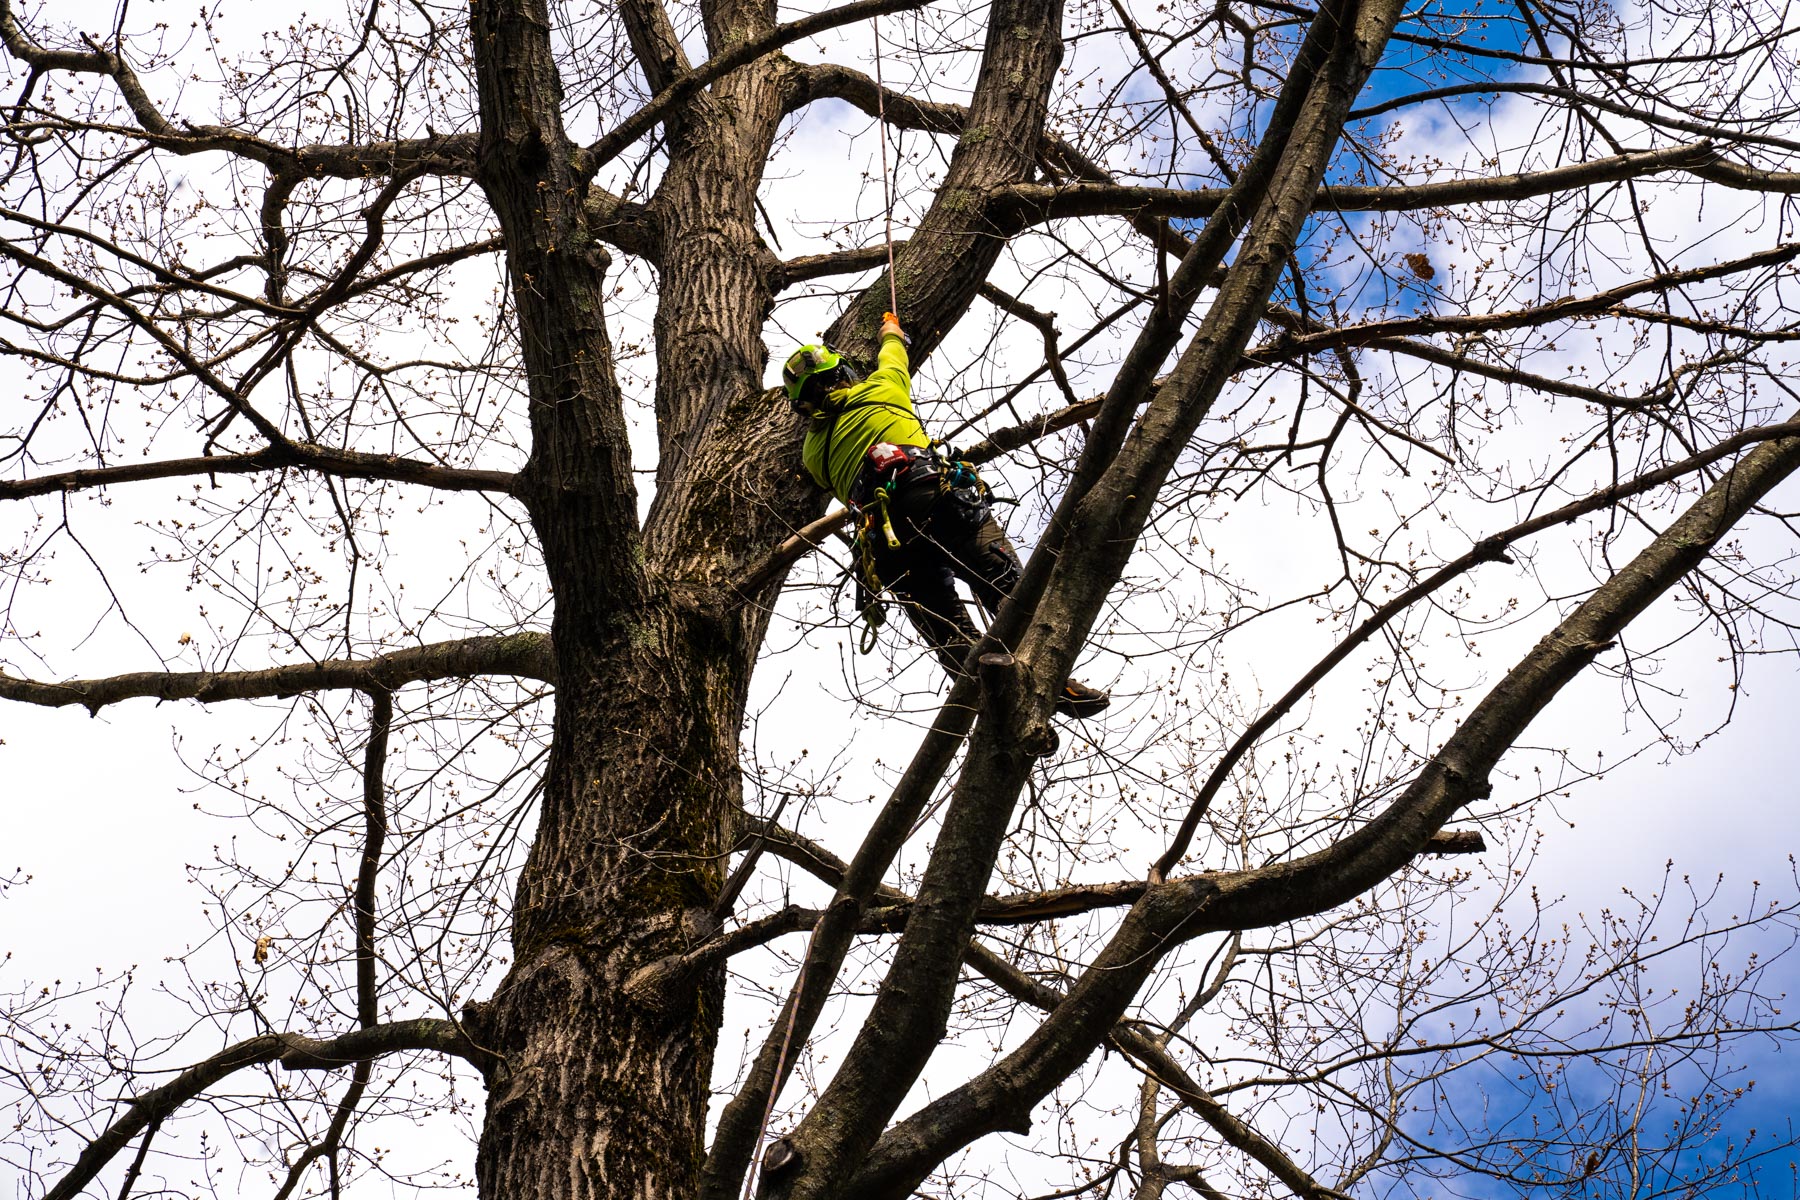 tree expert climbing tree to trim